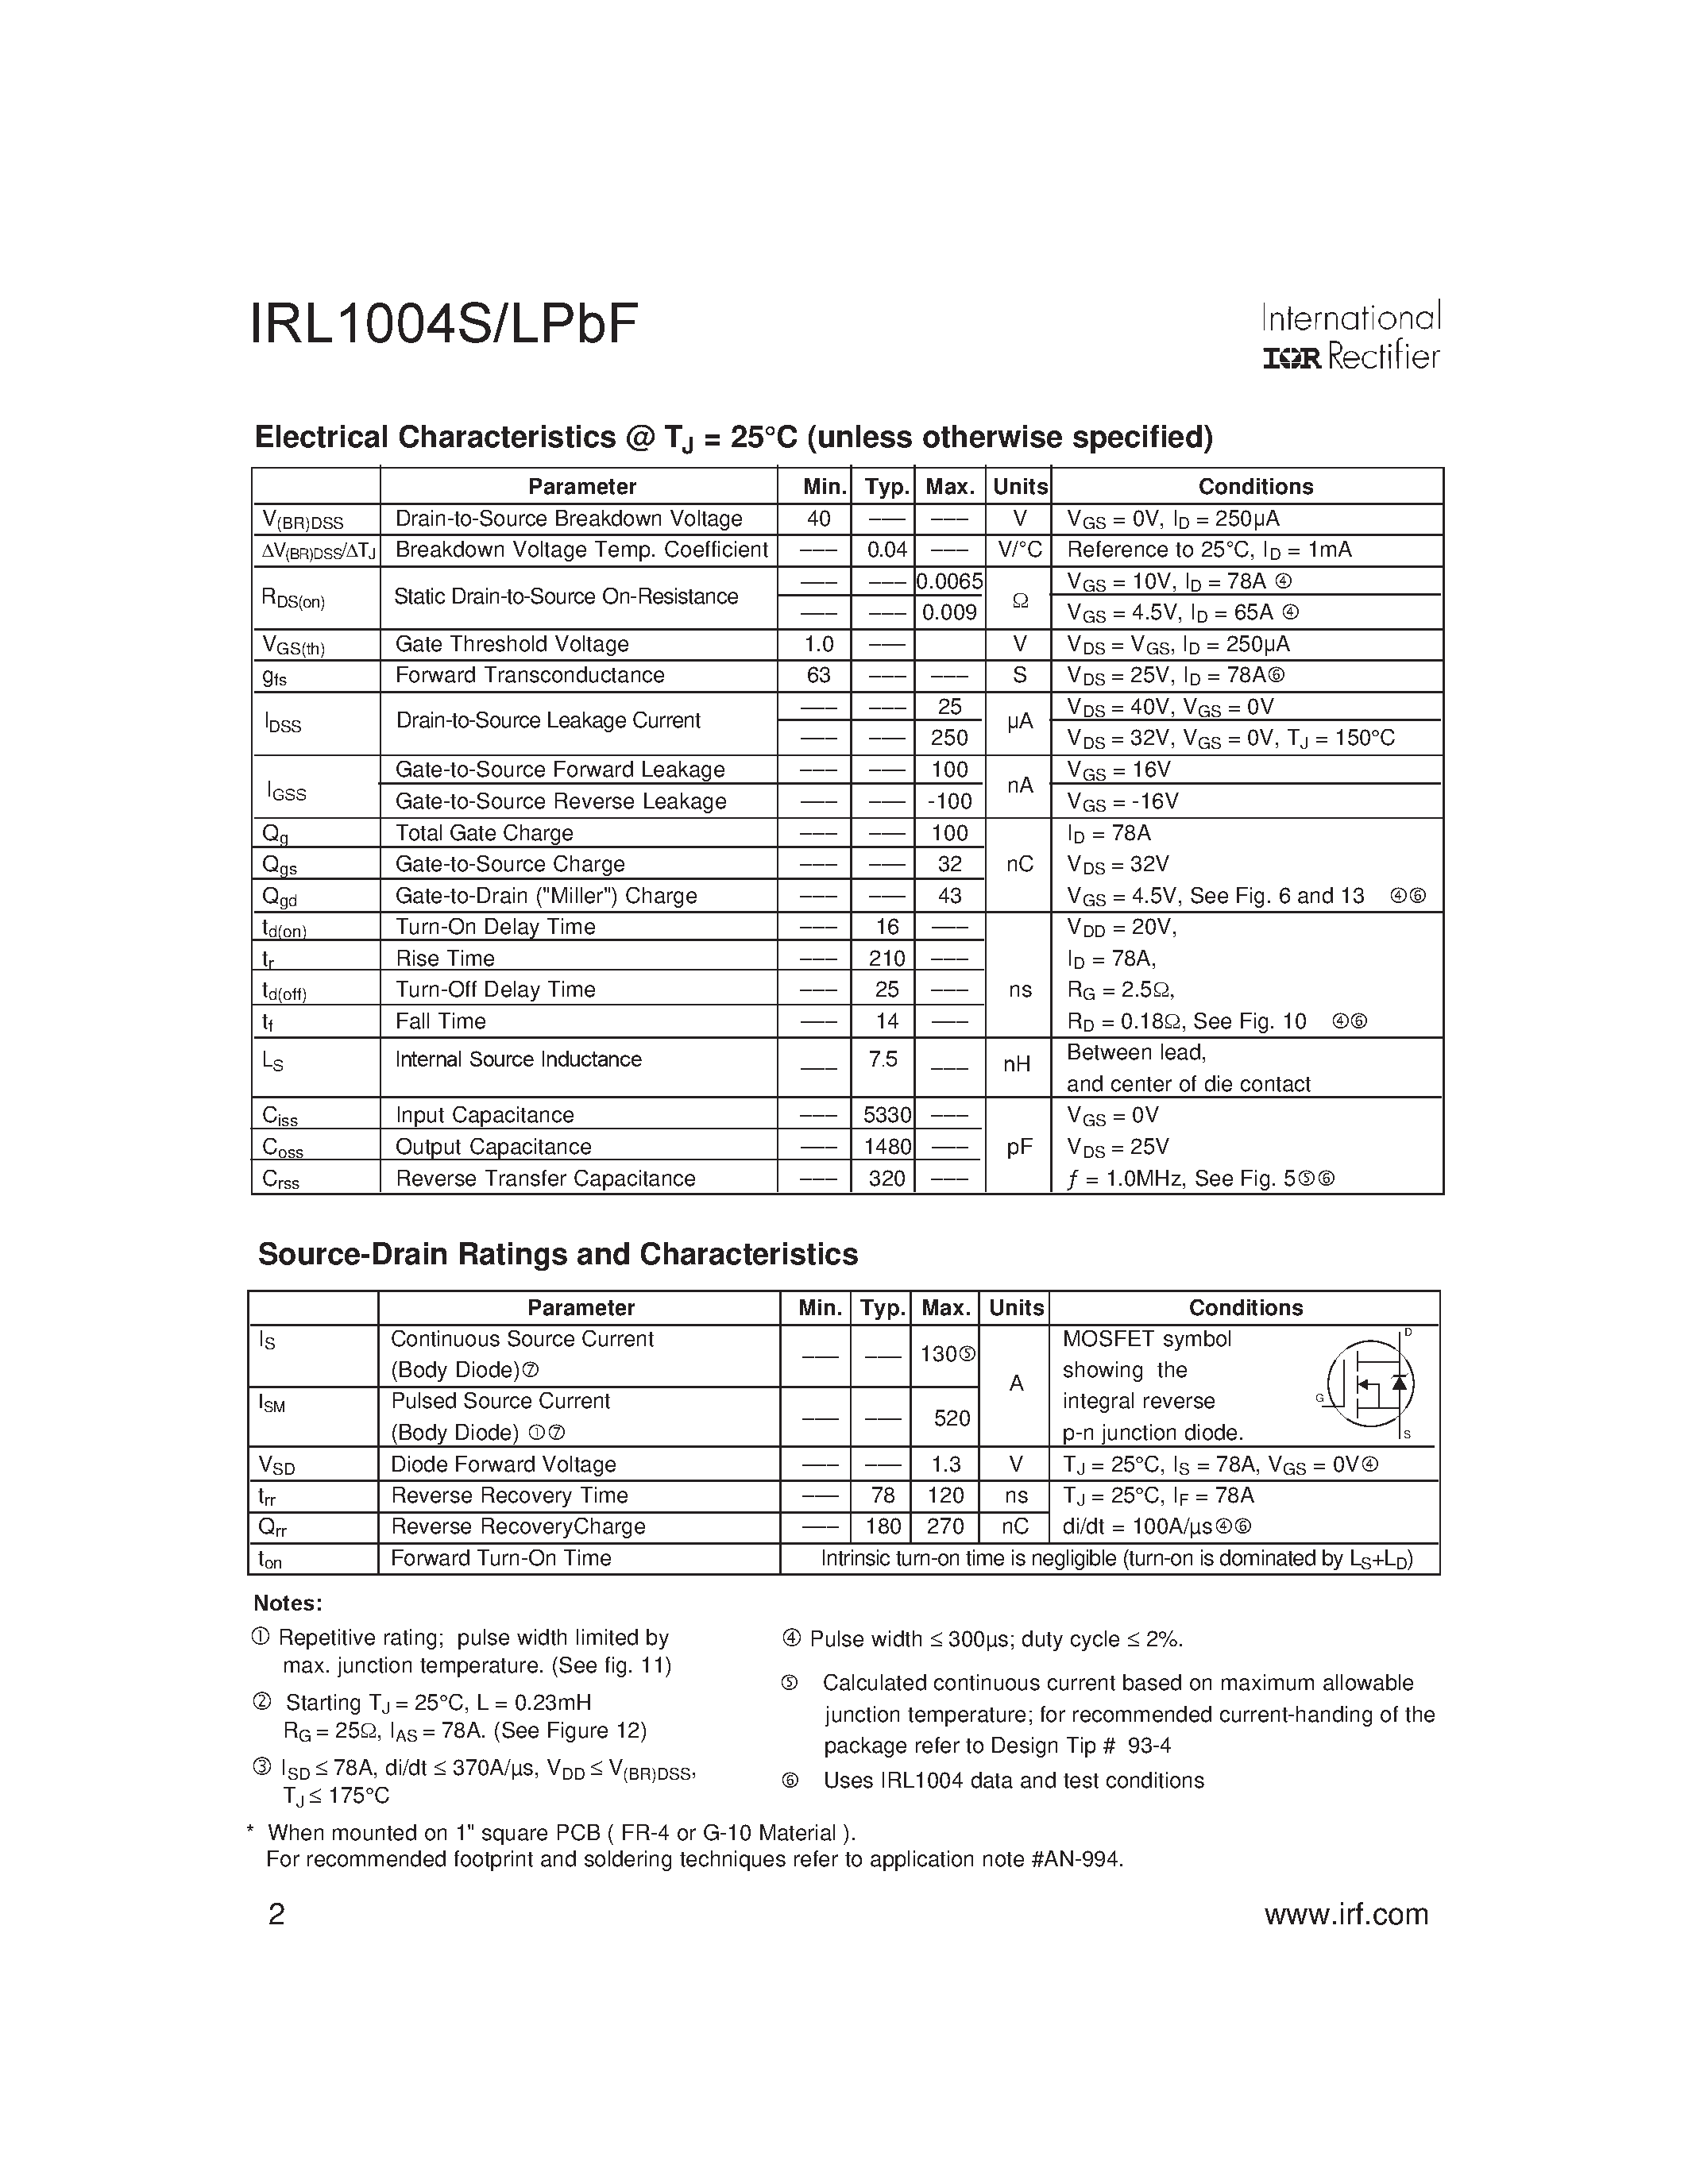 Datasheet IRL1004LPBF - (IRL1004SPBF / IRL1004LPBF) HEXFET Power MOSFET page 2